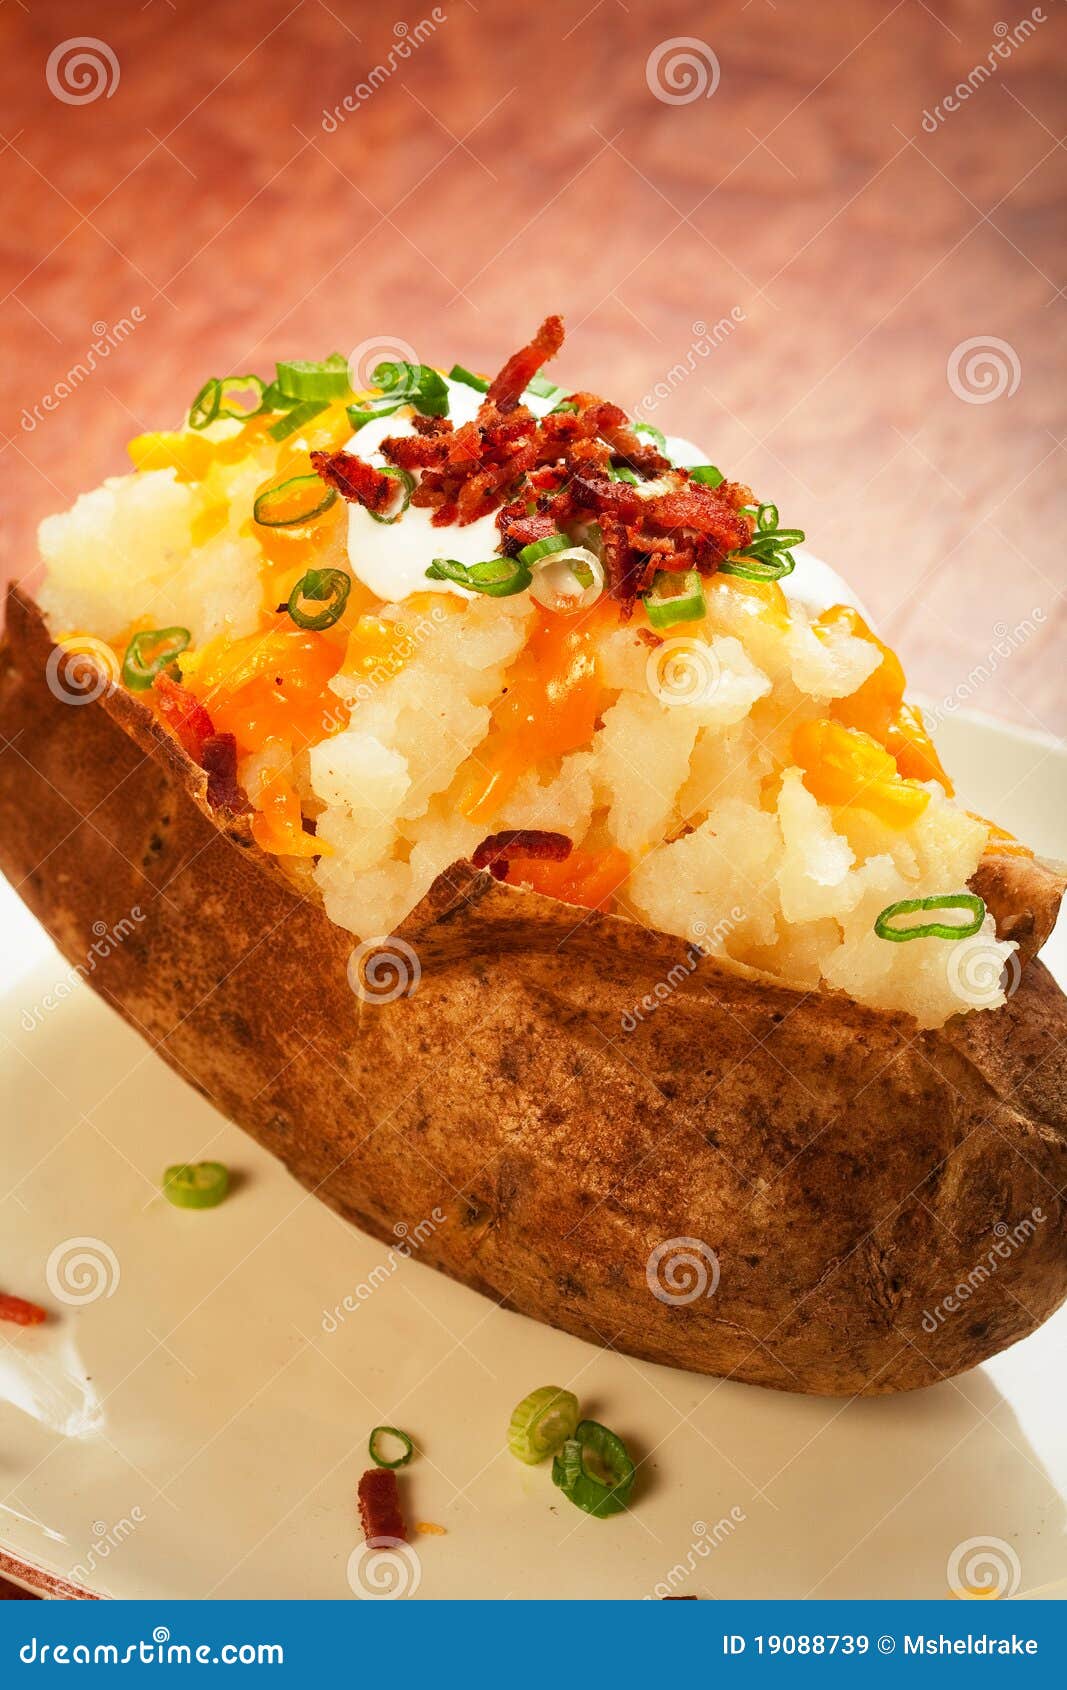 loaded baked potato